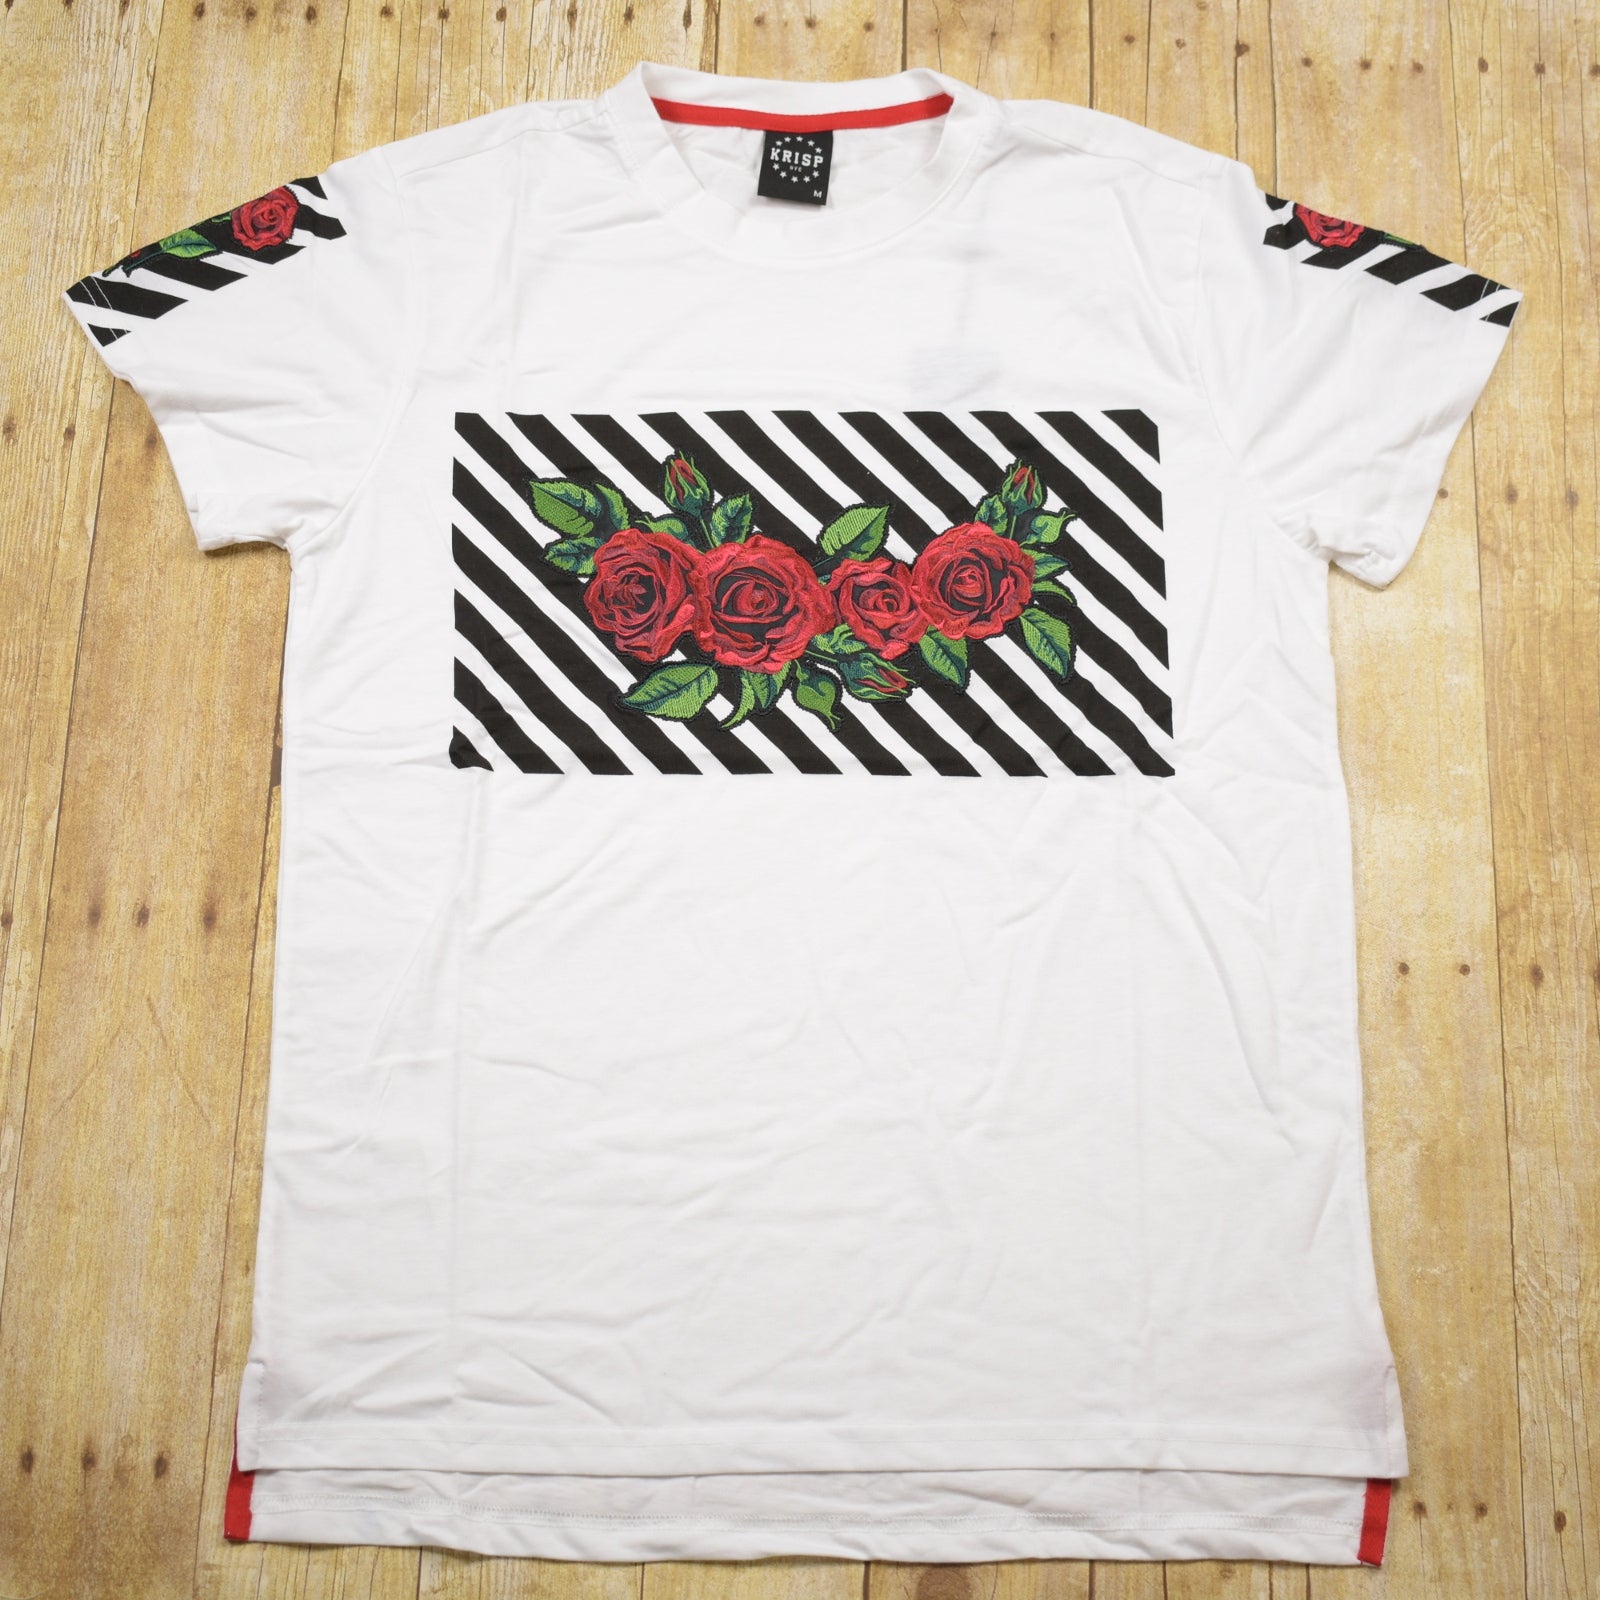 Embroidered Rose T-Shirt Memphis Urban Wear